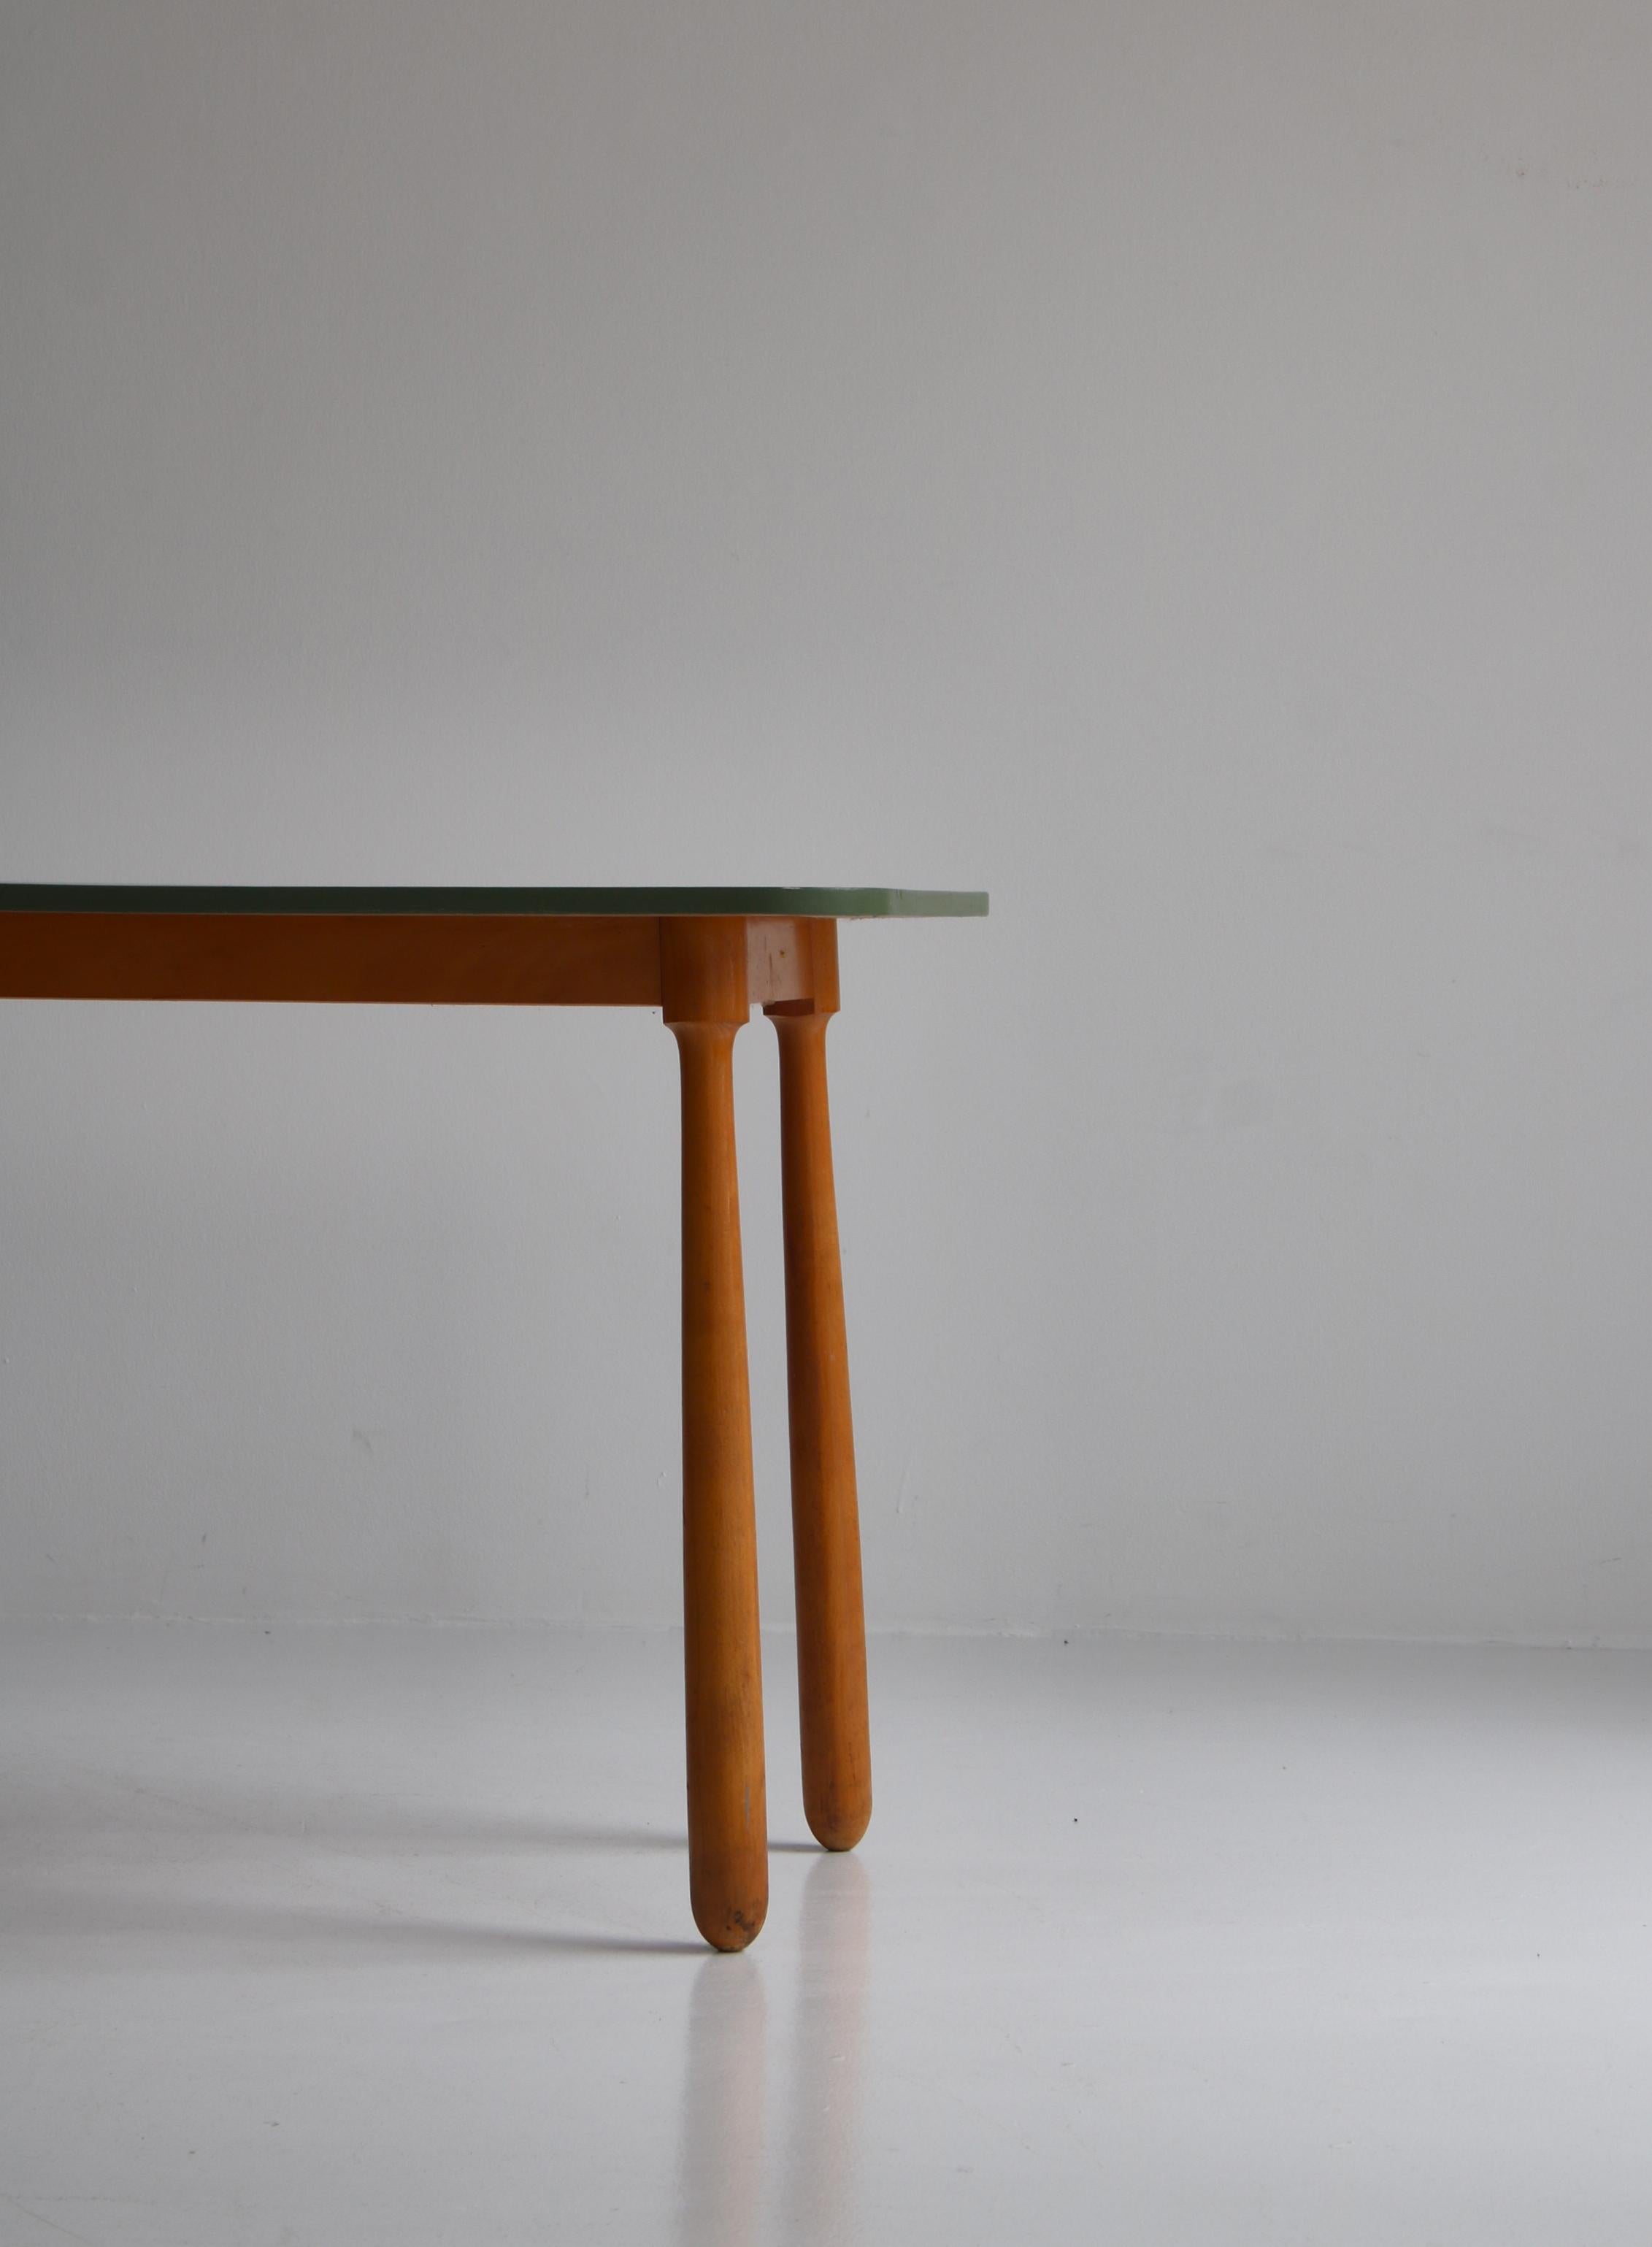 Arnold Madsen Club Legged Desk / Table in Beech, Scandinavian Modern, 1940s For Sale 4